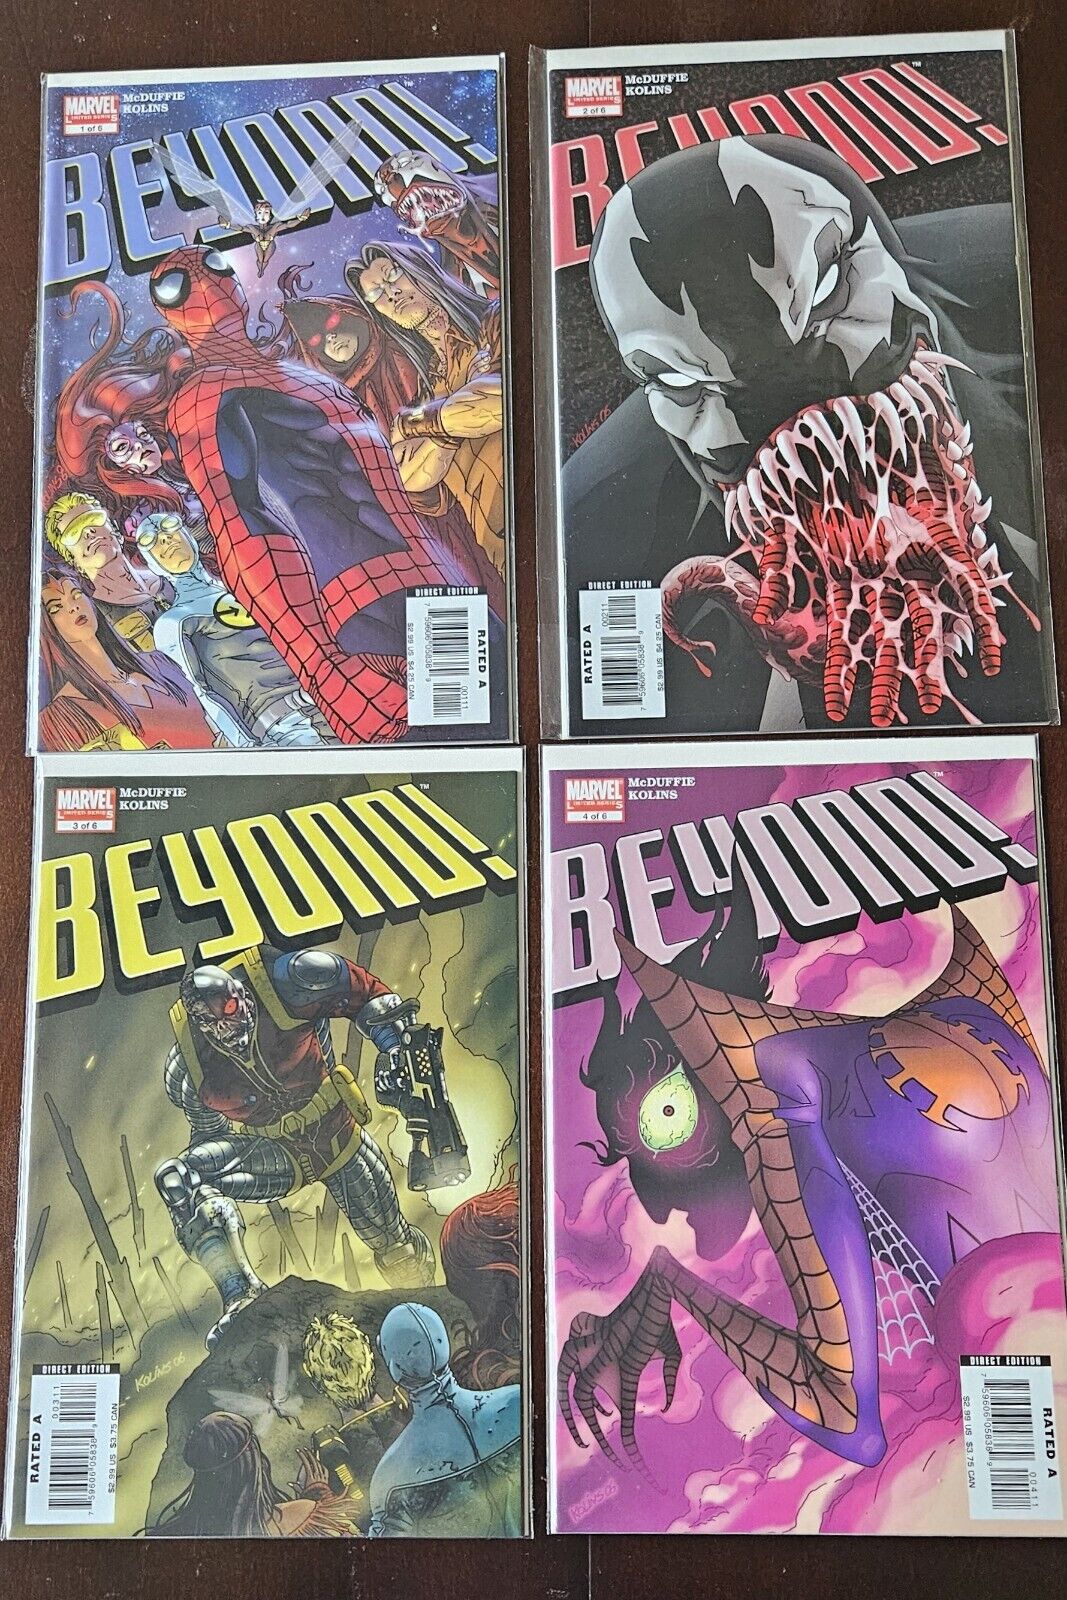 Marvel Beyond #1-4, High Grade, All 1st Printing